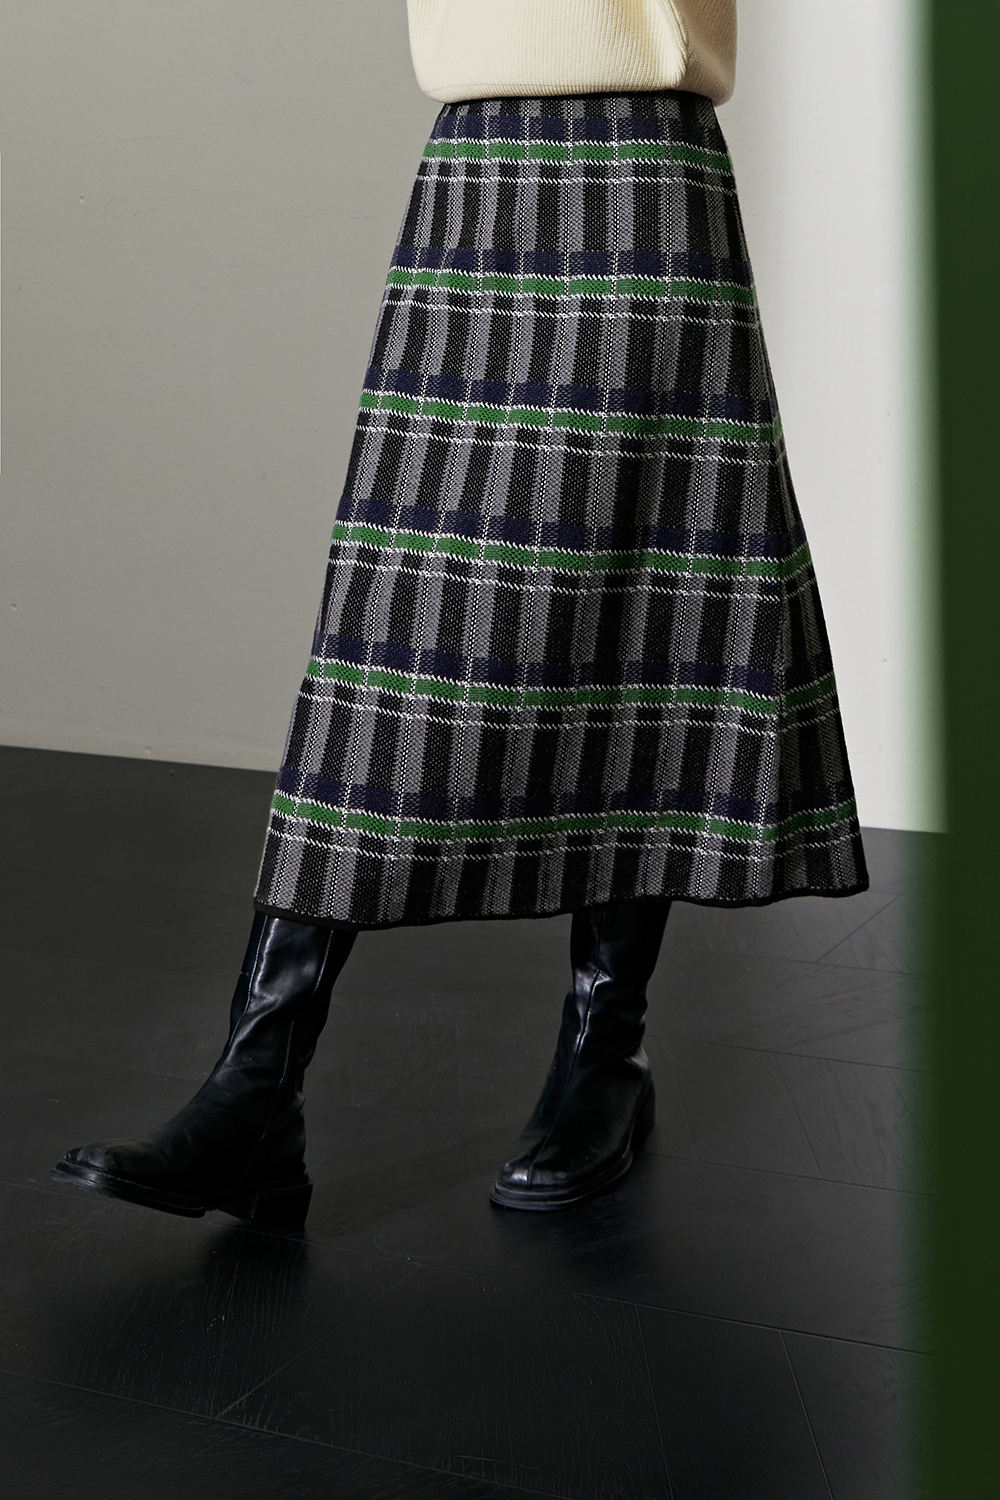 New retro bag hip skirt imitation woolen plaid skirt long skirt women